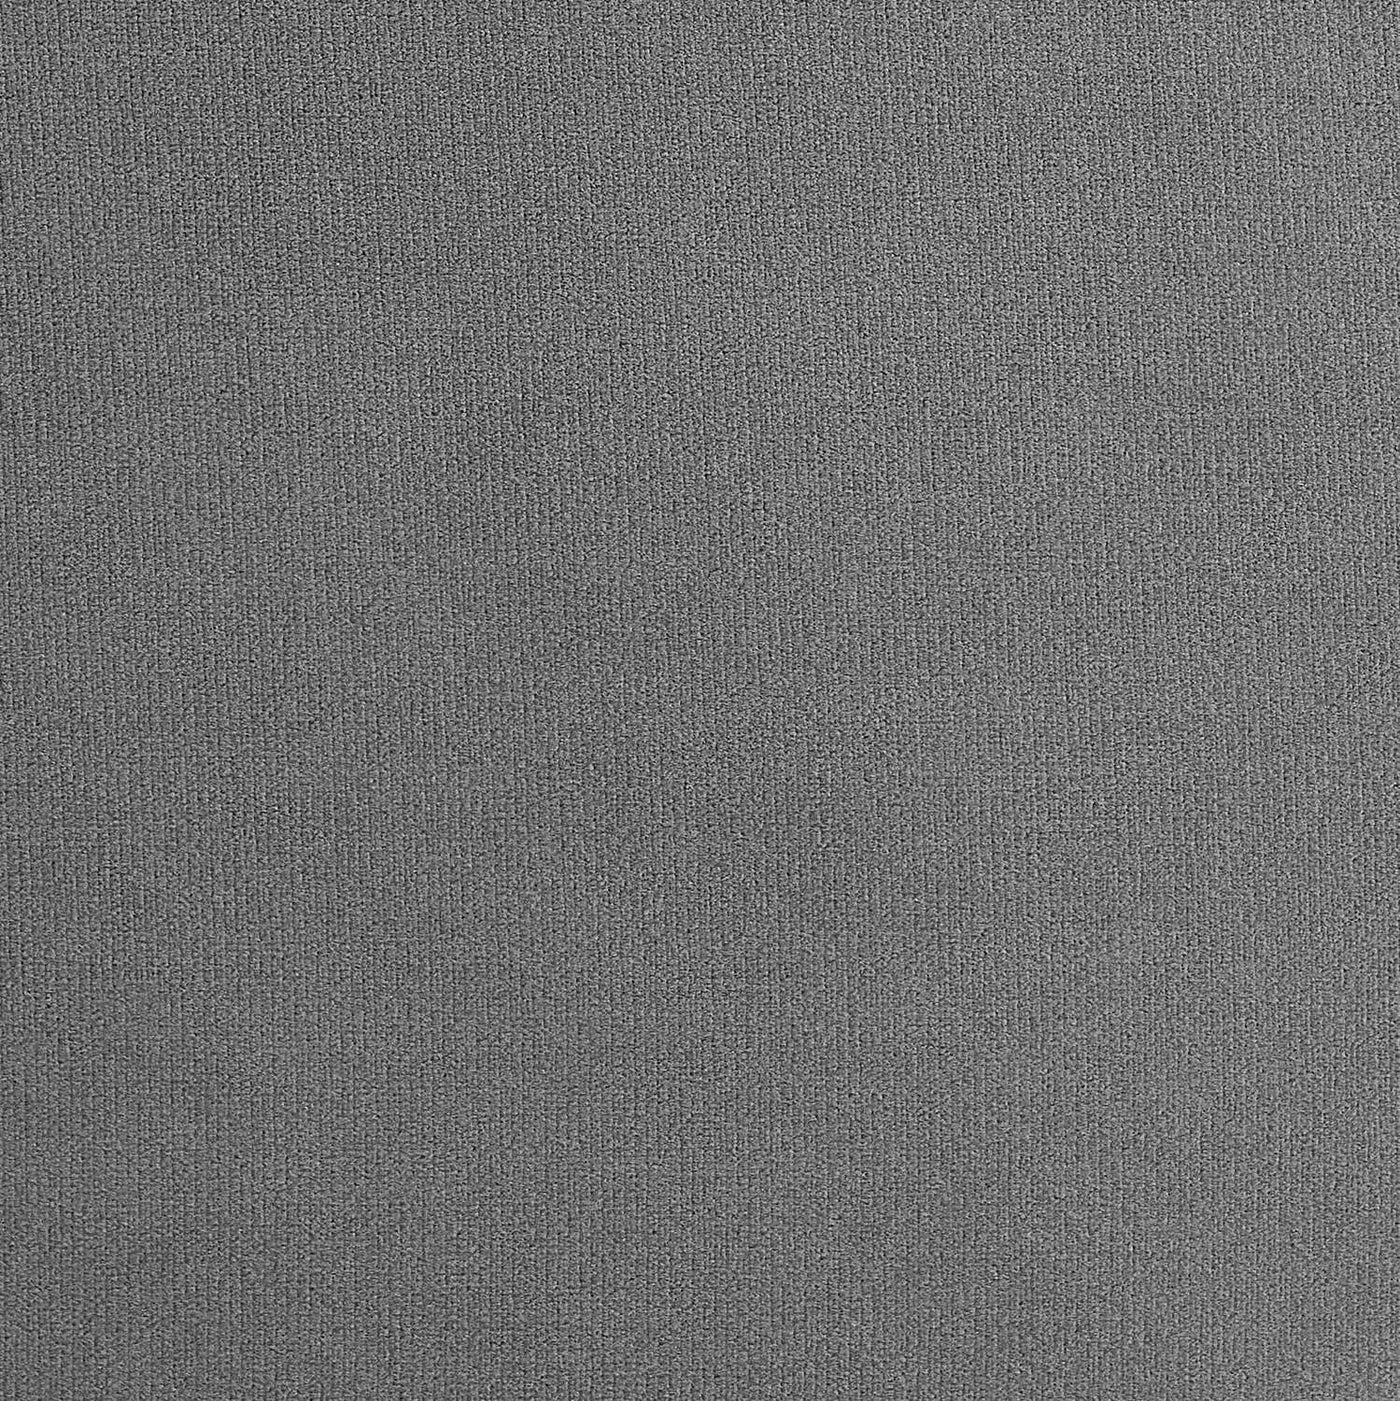 Nori 3-Piece Full Bed - Grey